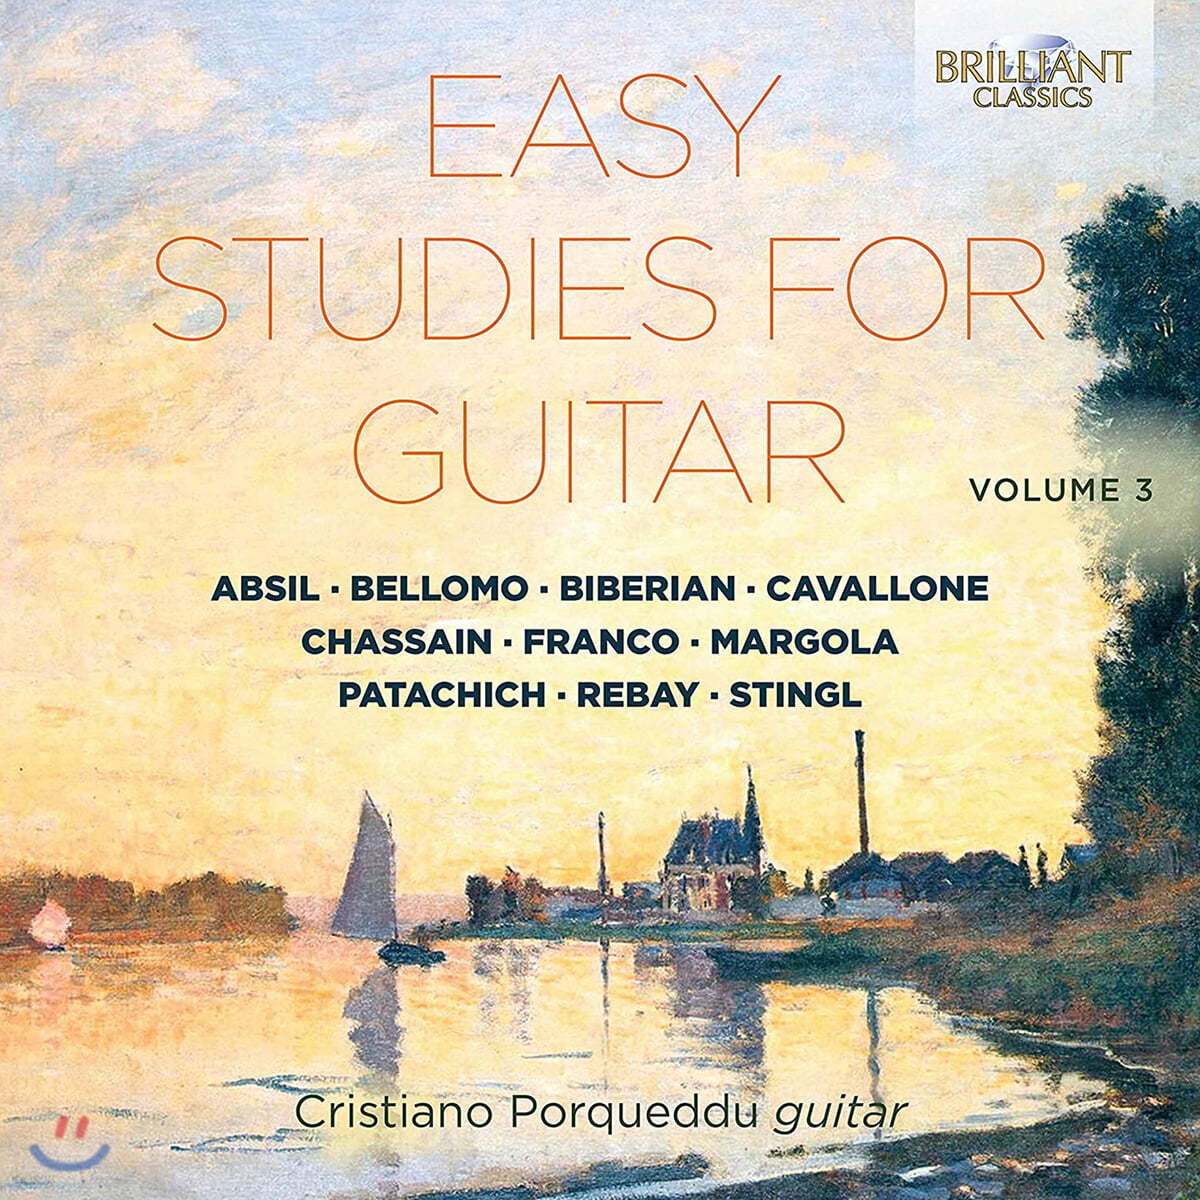 Cristiano Porqueddu 기타를 위한 쉬운 연습곡 3집 - 카발로네 / 퐁세 / 탄스만 (Easy Studies for Guitar Volume 3)